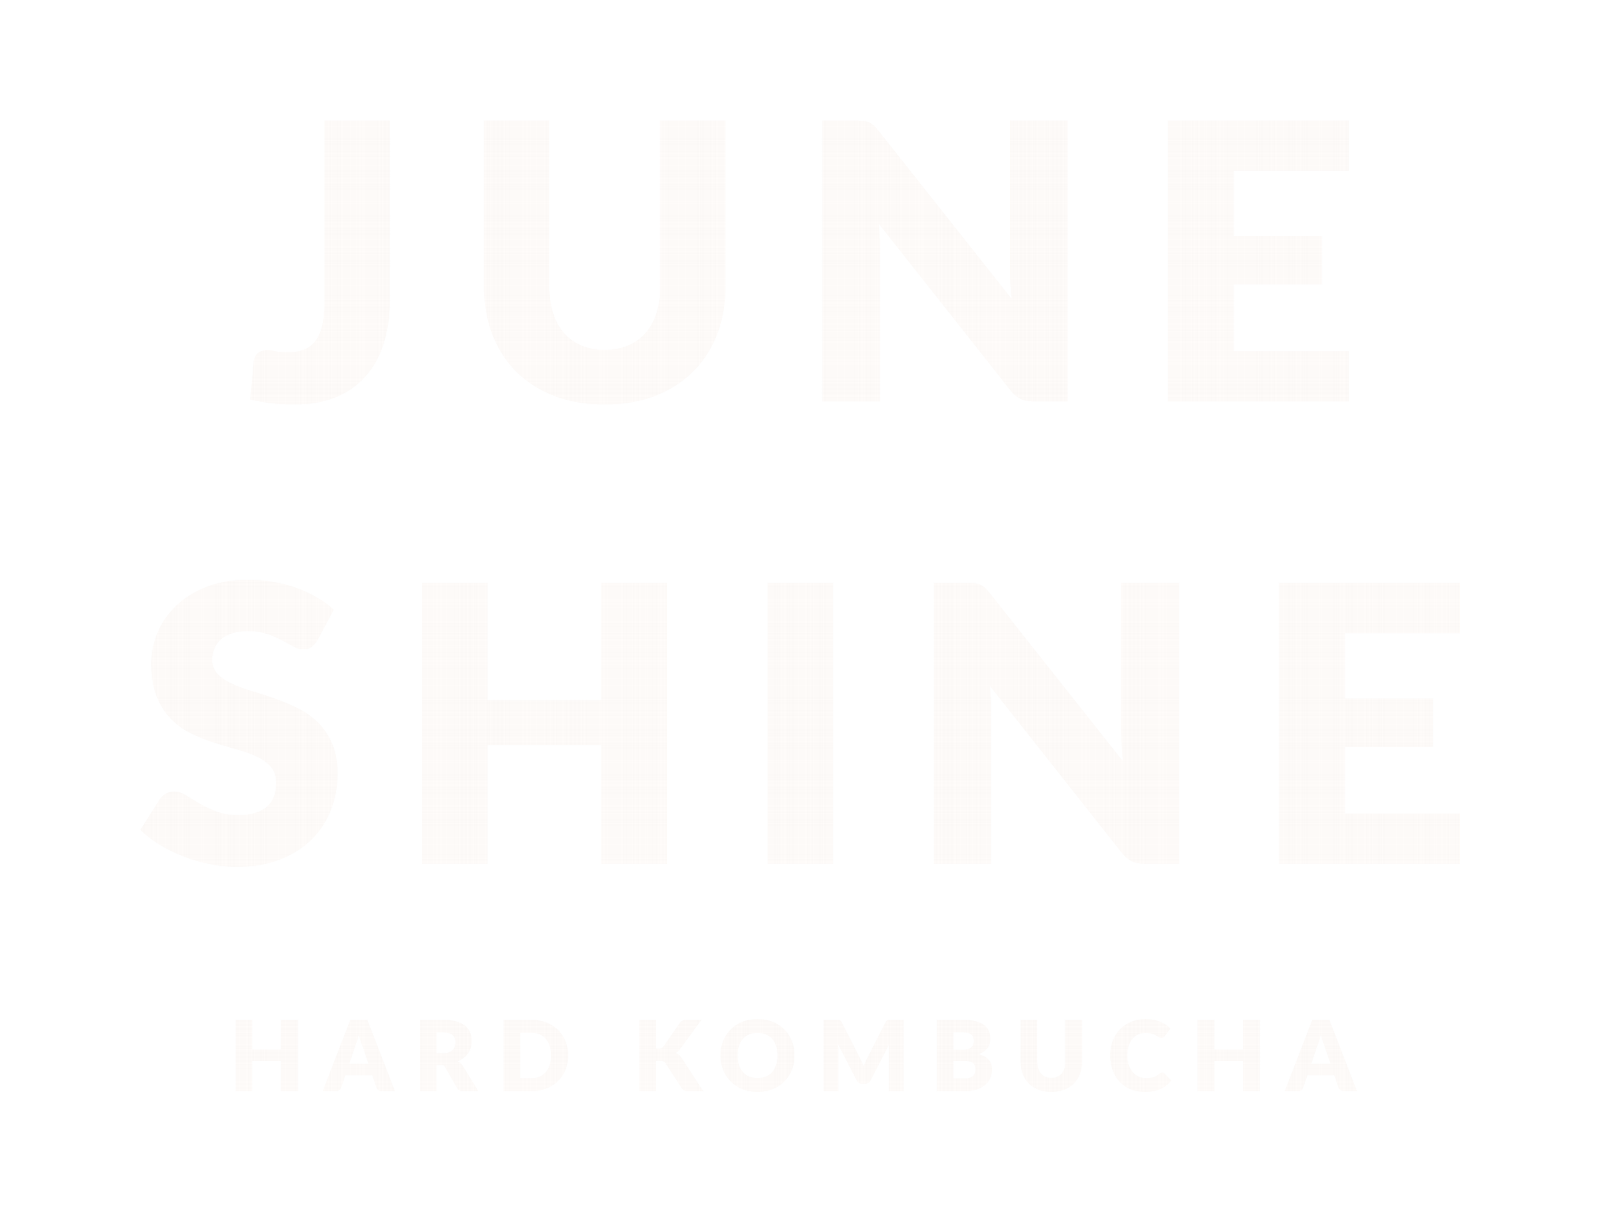 June Shine